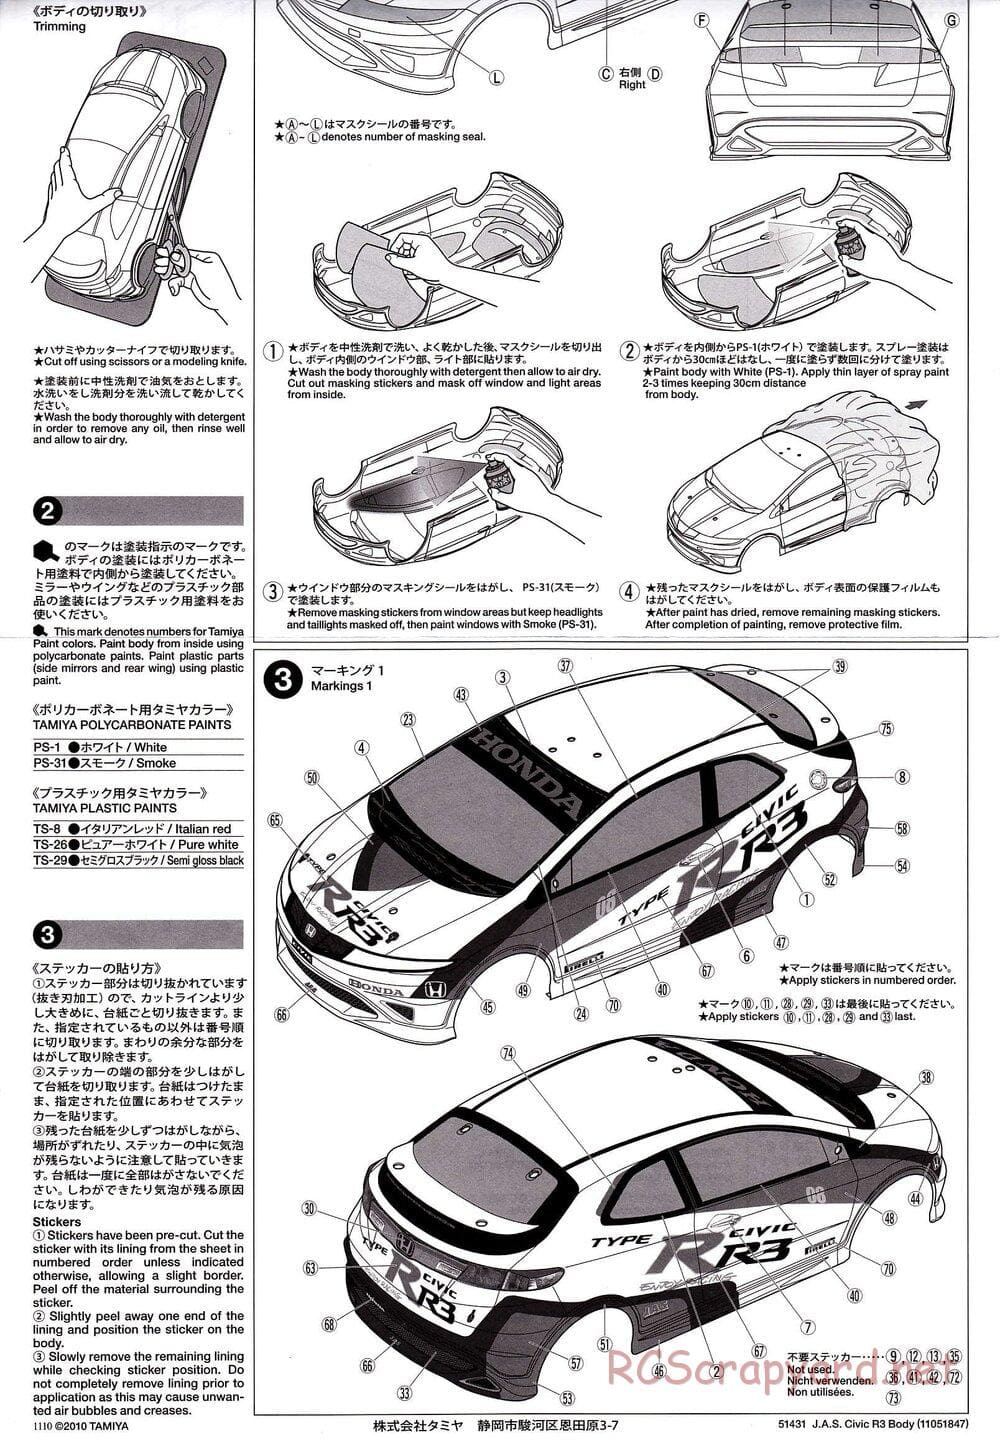 Tamiya - Honda Civic Type-R R3 JAS Motorsport - FF-03 Chassis - Body Manual - Page 2